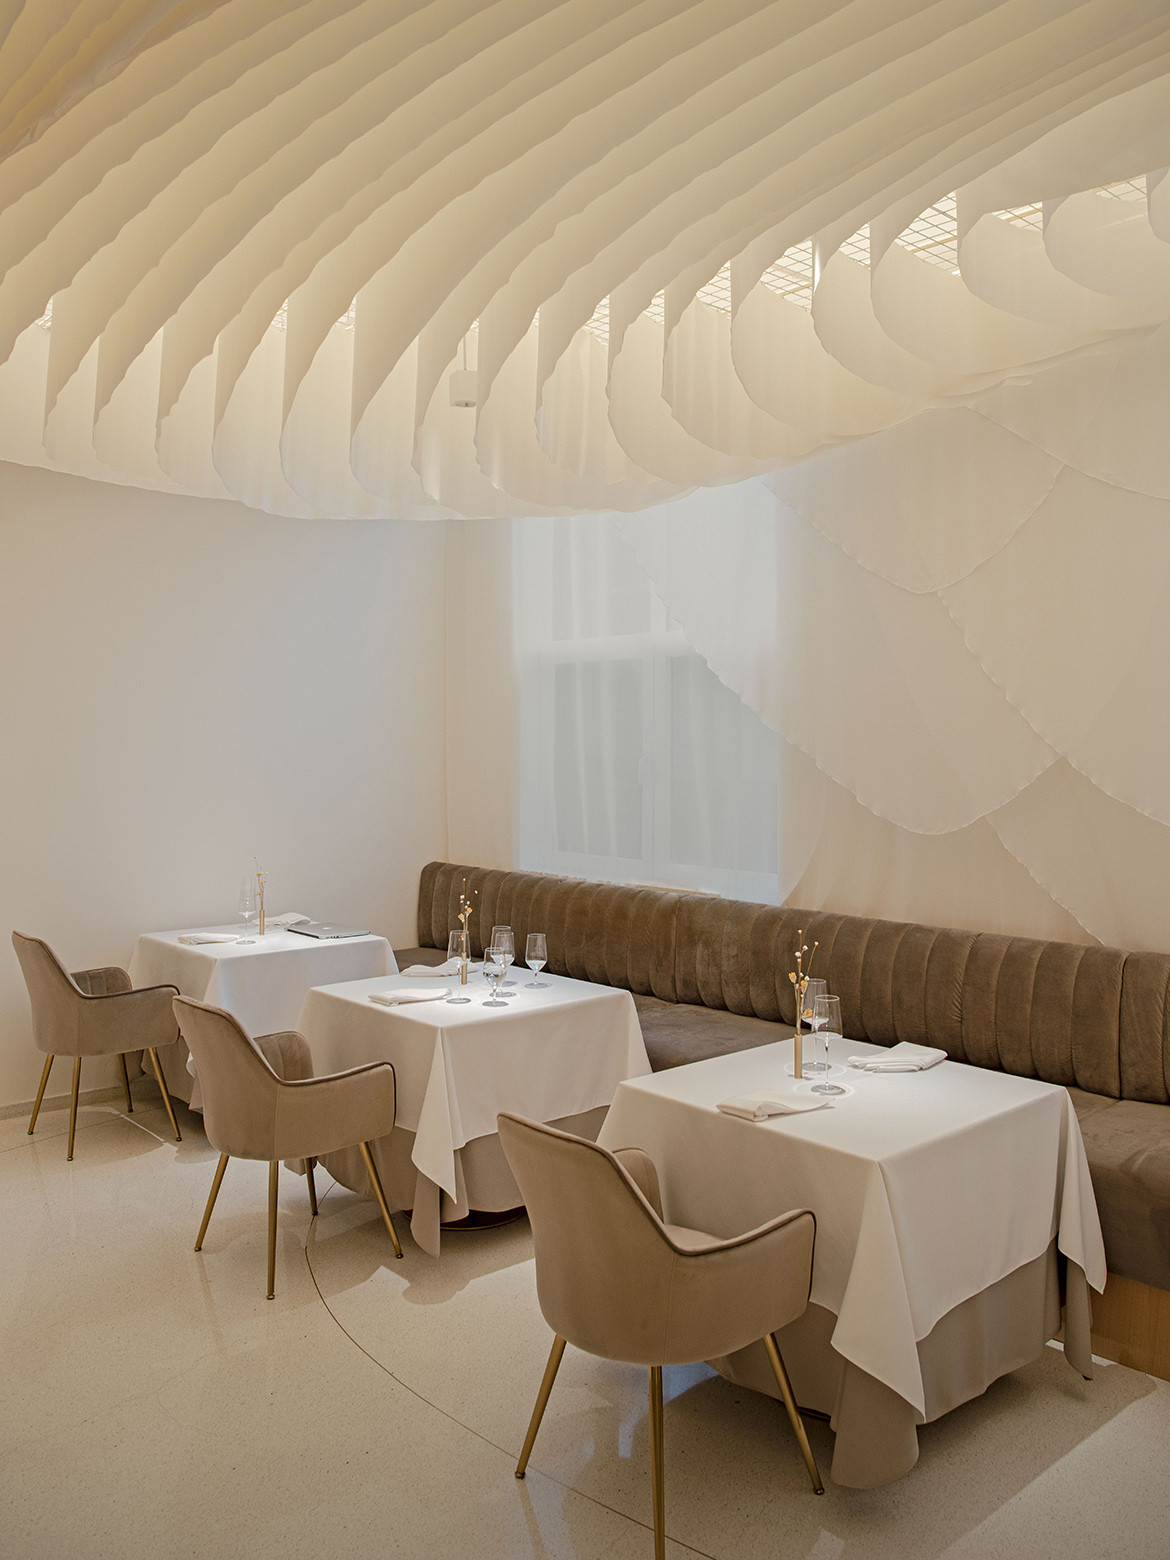 La Chansonnière by GB Space | French restaurant | Beijing | fine-dining | interior design